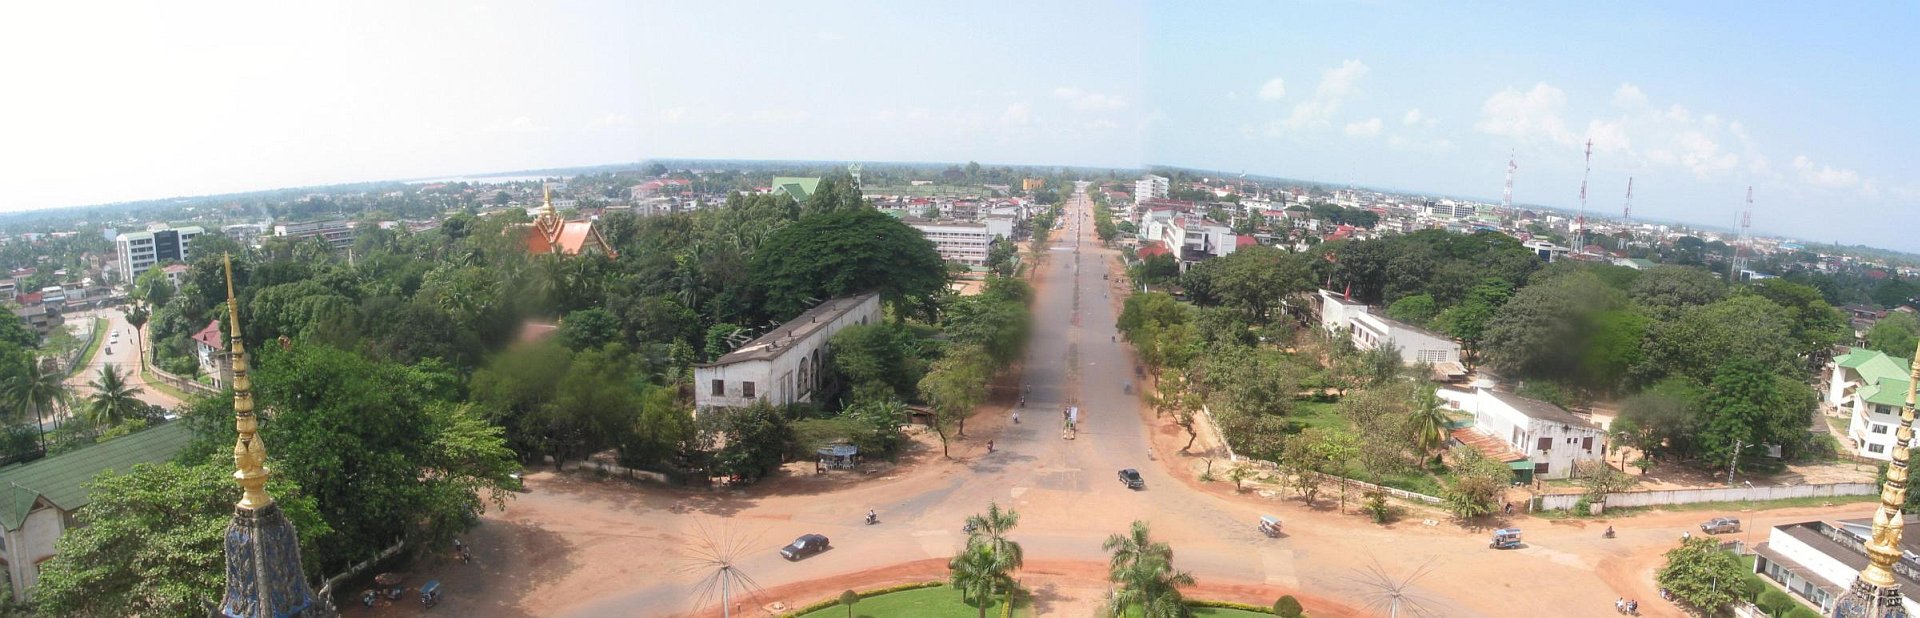 Laos-Vientiane-wsdangamelin1